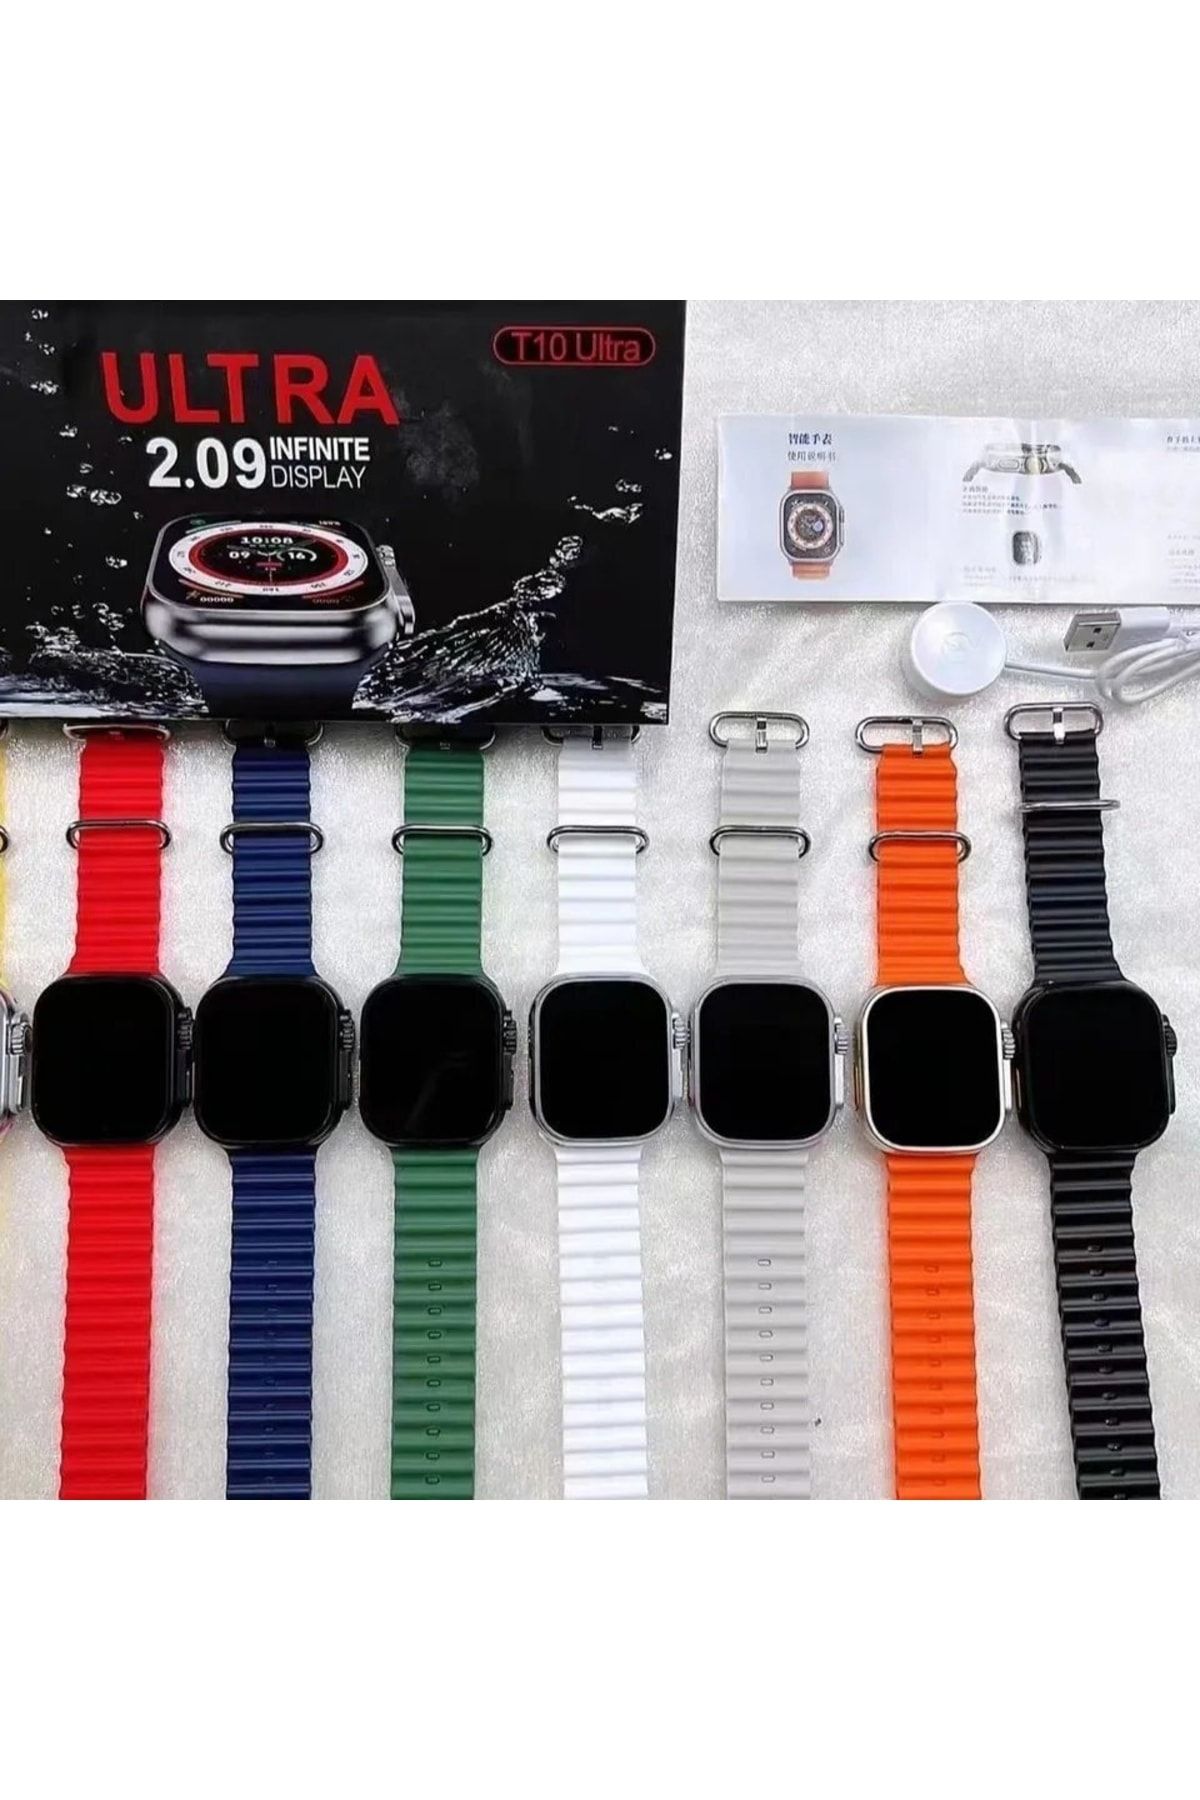 Linva Watch 8 Ultra Serisi T10 Ultra 2023 Son Sürüm Akıllı Saat Çift Kordonlu 2.09 Dev Ekran 49mm